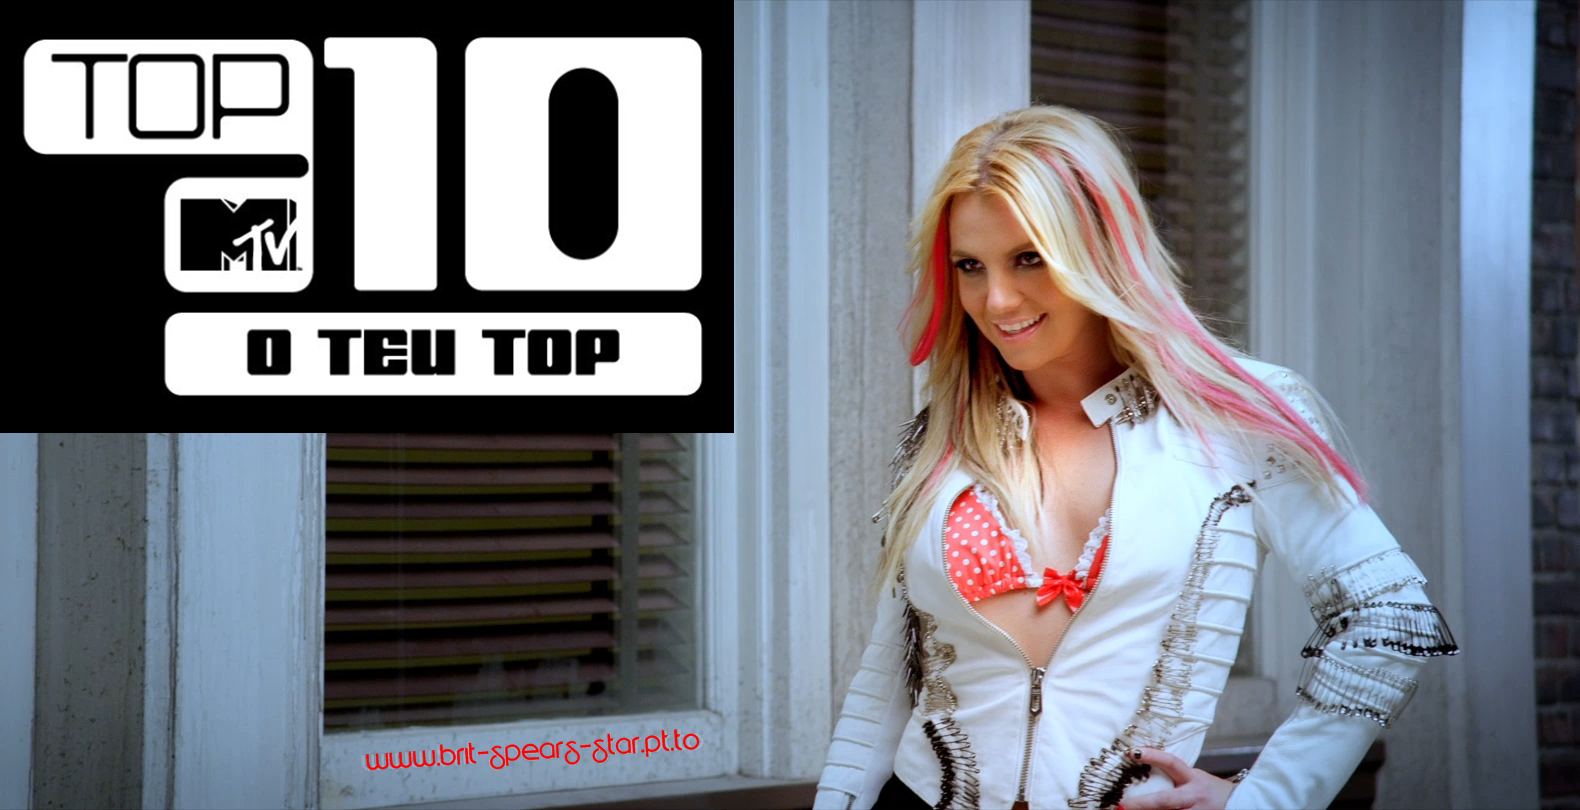 https://blogger.googleusercontent.com/img/b/R29vZ2xl/AVvXsEgu44Elqzzd4ibt2LcF84NpmwwviqoQfjdOc3Ksw5L5sAmyFEMUjREsEBdelkMfiywbSvHrn9JSSSBJOW3W7GlHIFMvUvv37FHh7pt8lEqdFspsExb8eD1XnAUwoonO8ateUU_LD9LBtrs/s1600/Britney+Spears+-+I+Wanna+Go+-+MTV+TOP+10+-+brit-spears-star.pt.to.png